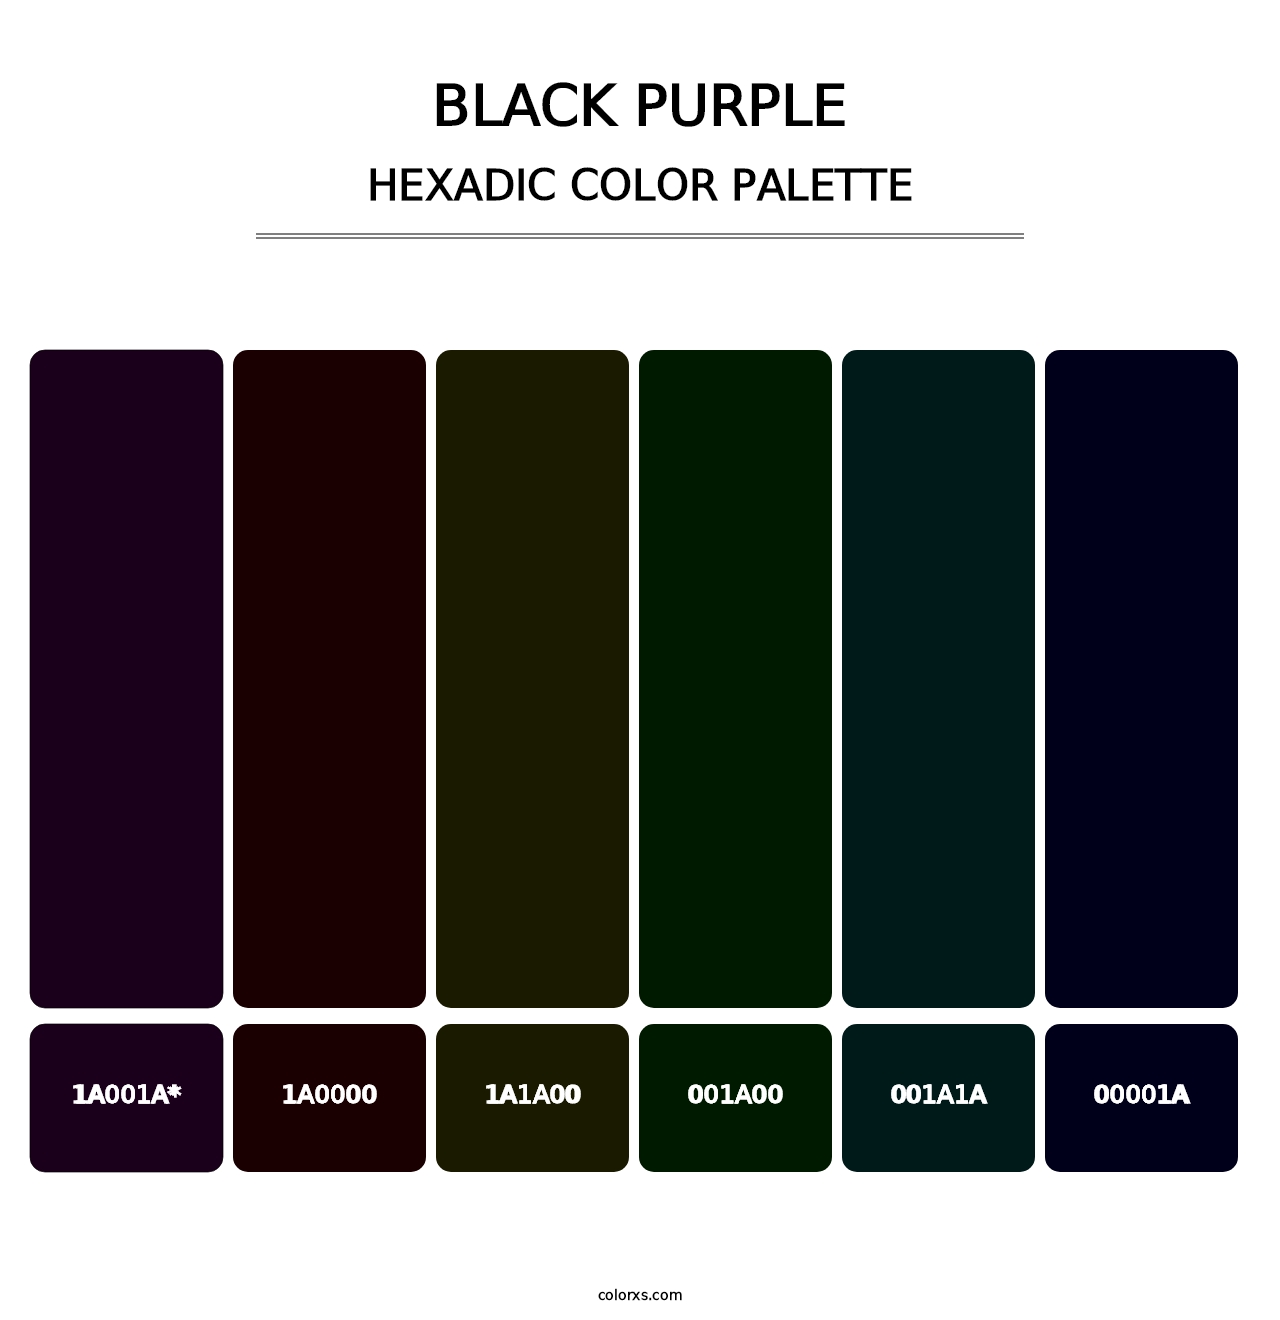 Black Purple - Hexadic Color Palette